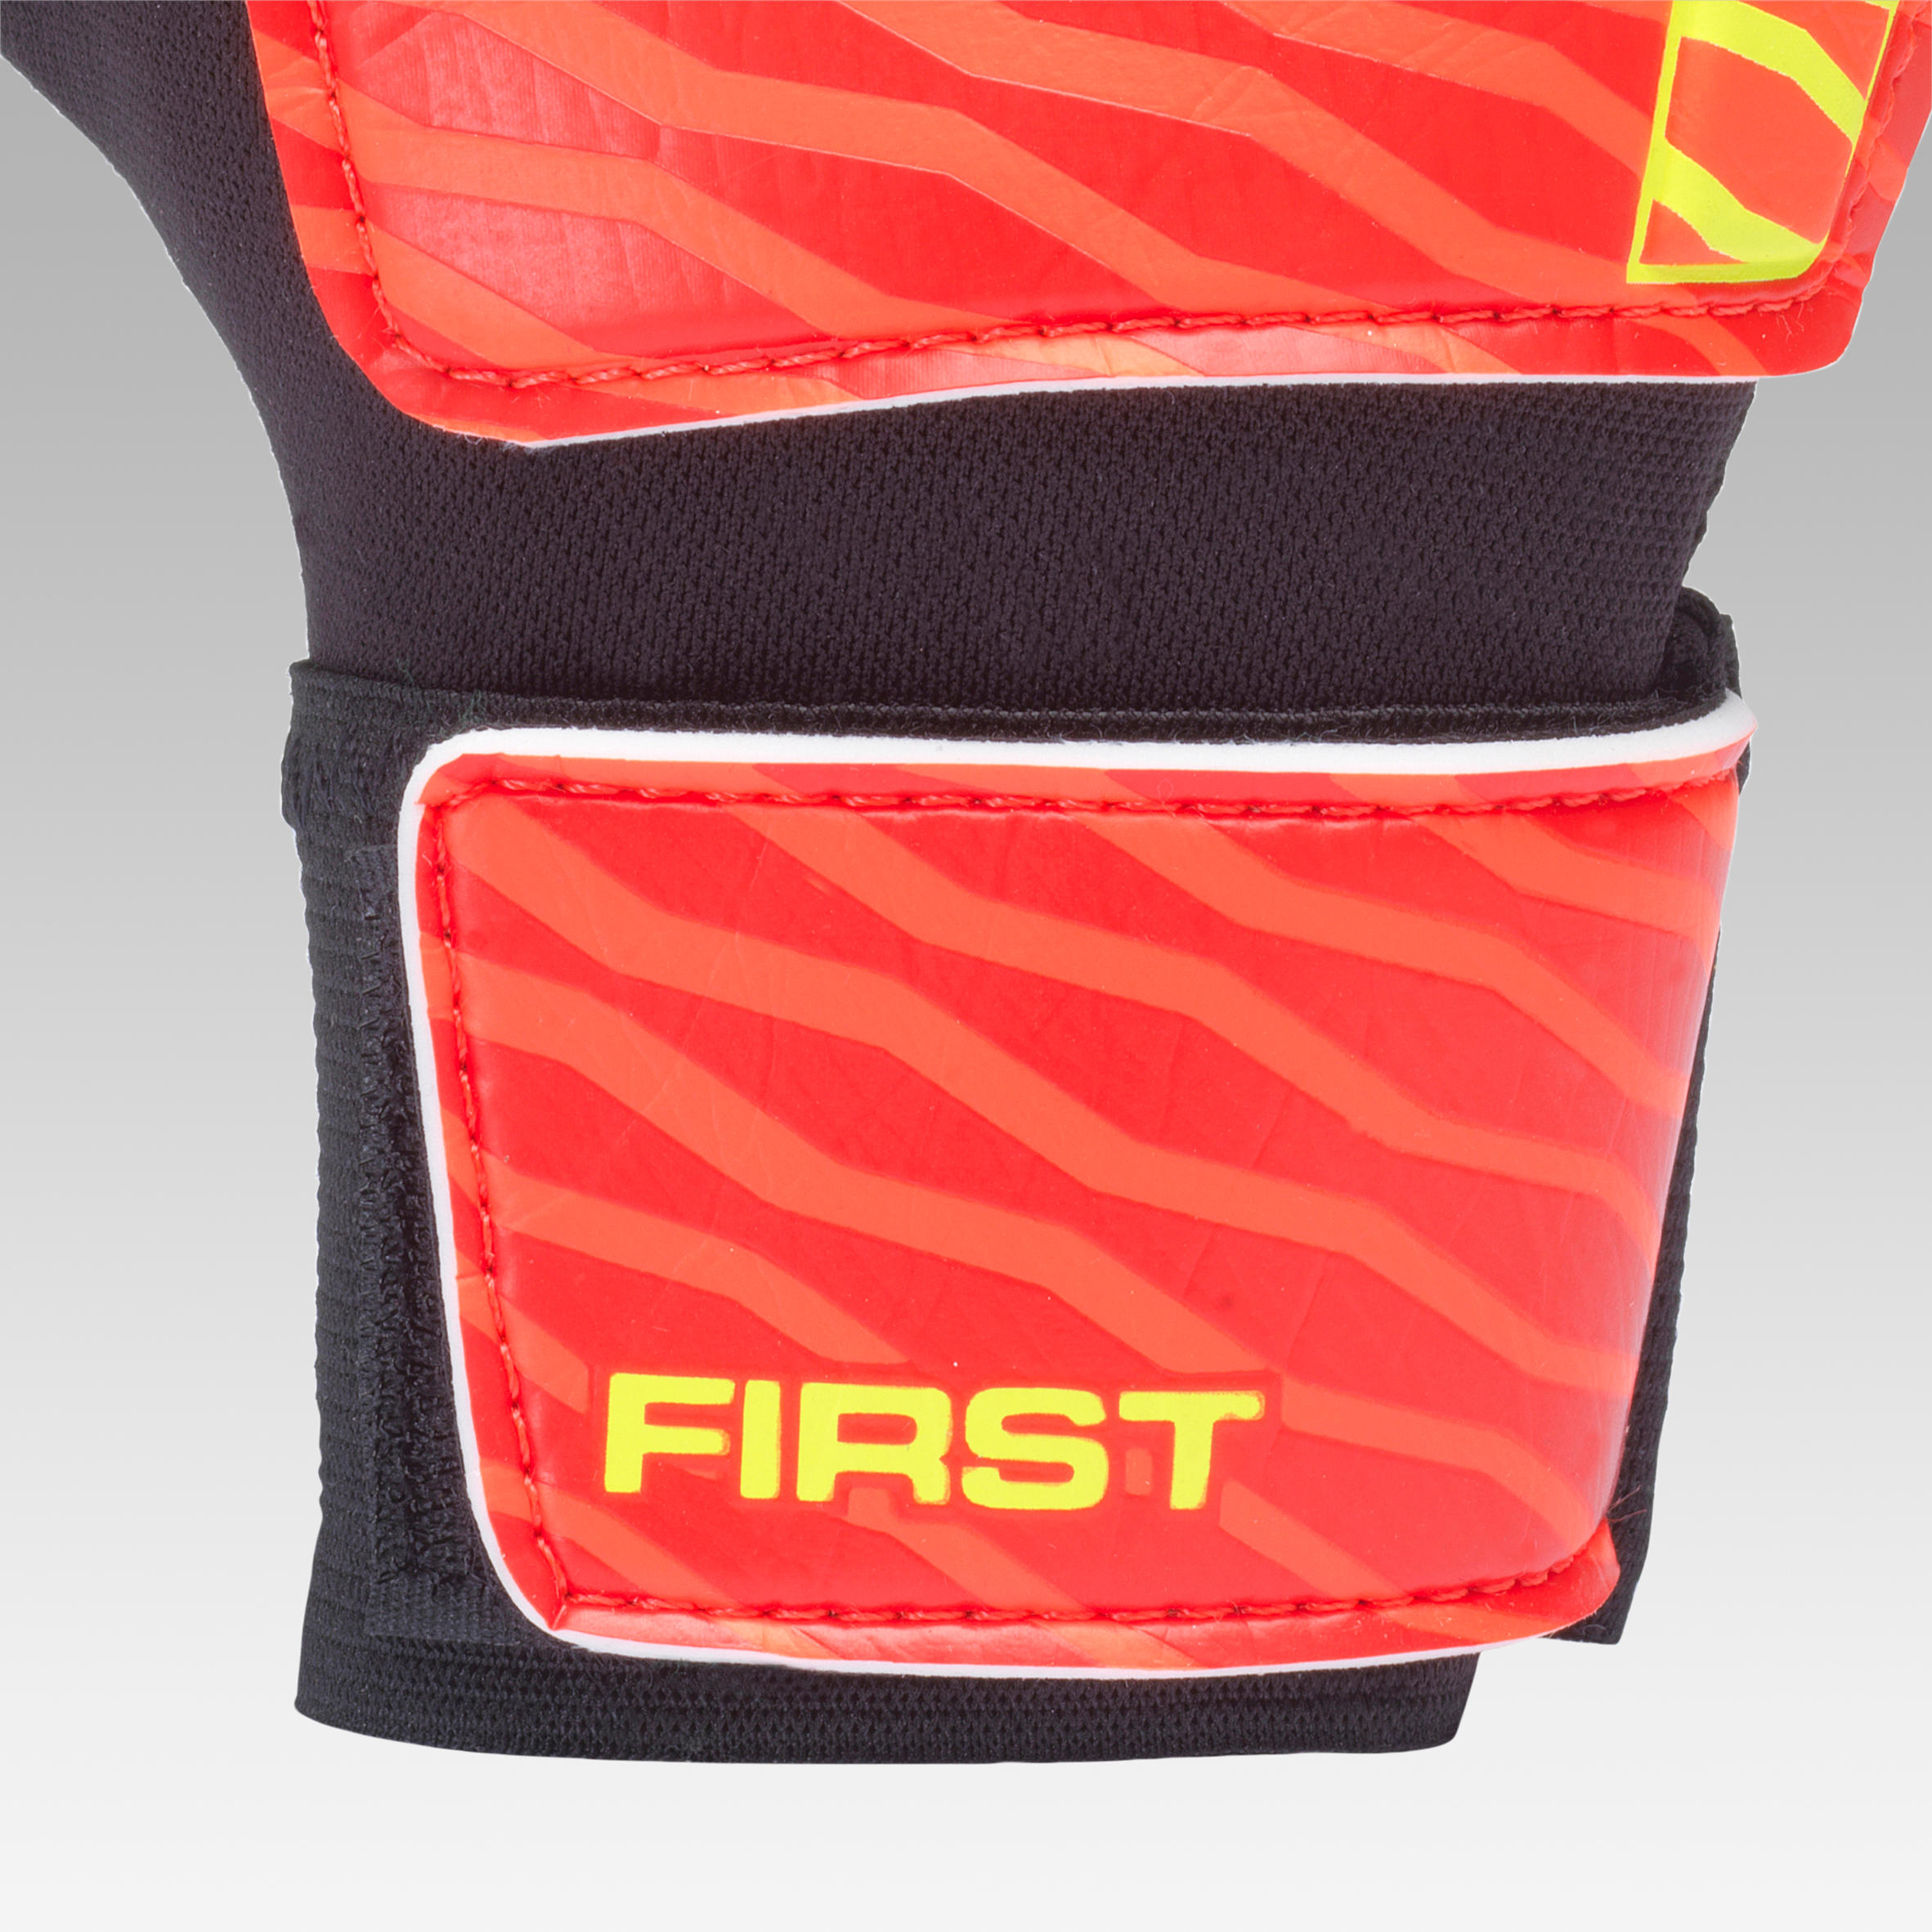 First Kids' Football Goalkeeper Gloves - Orange/Black/Yellow 7/10